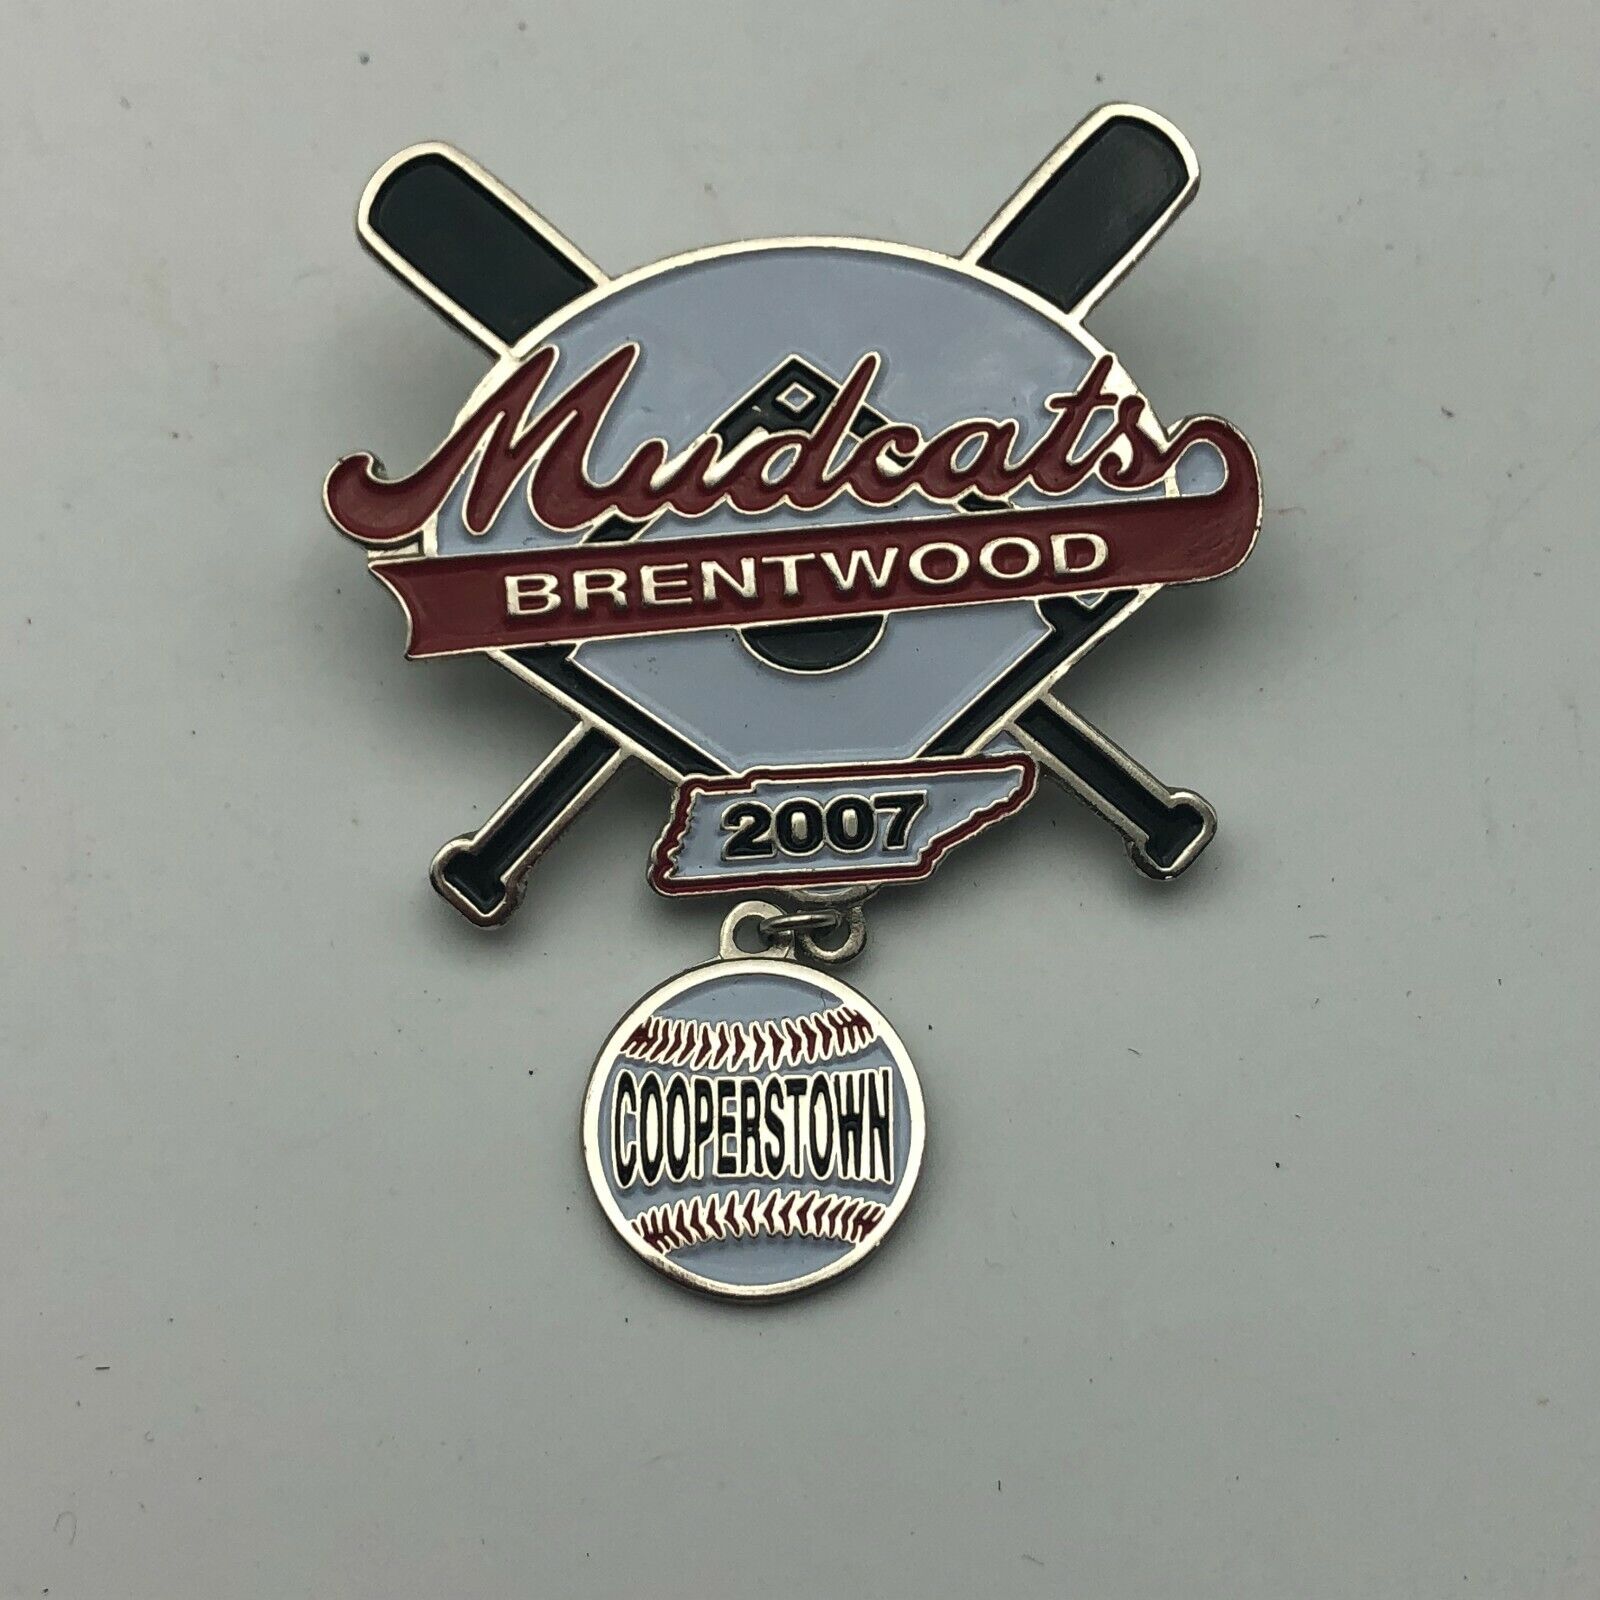 2007 Brentwood Medcats Baseball Team Badge Lapel Hat Pin Dangle Charm  K5 